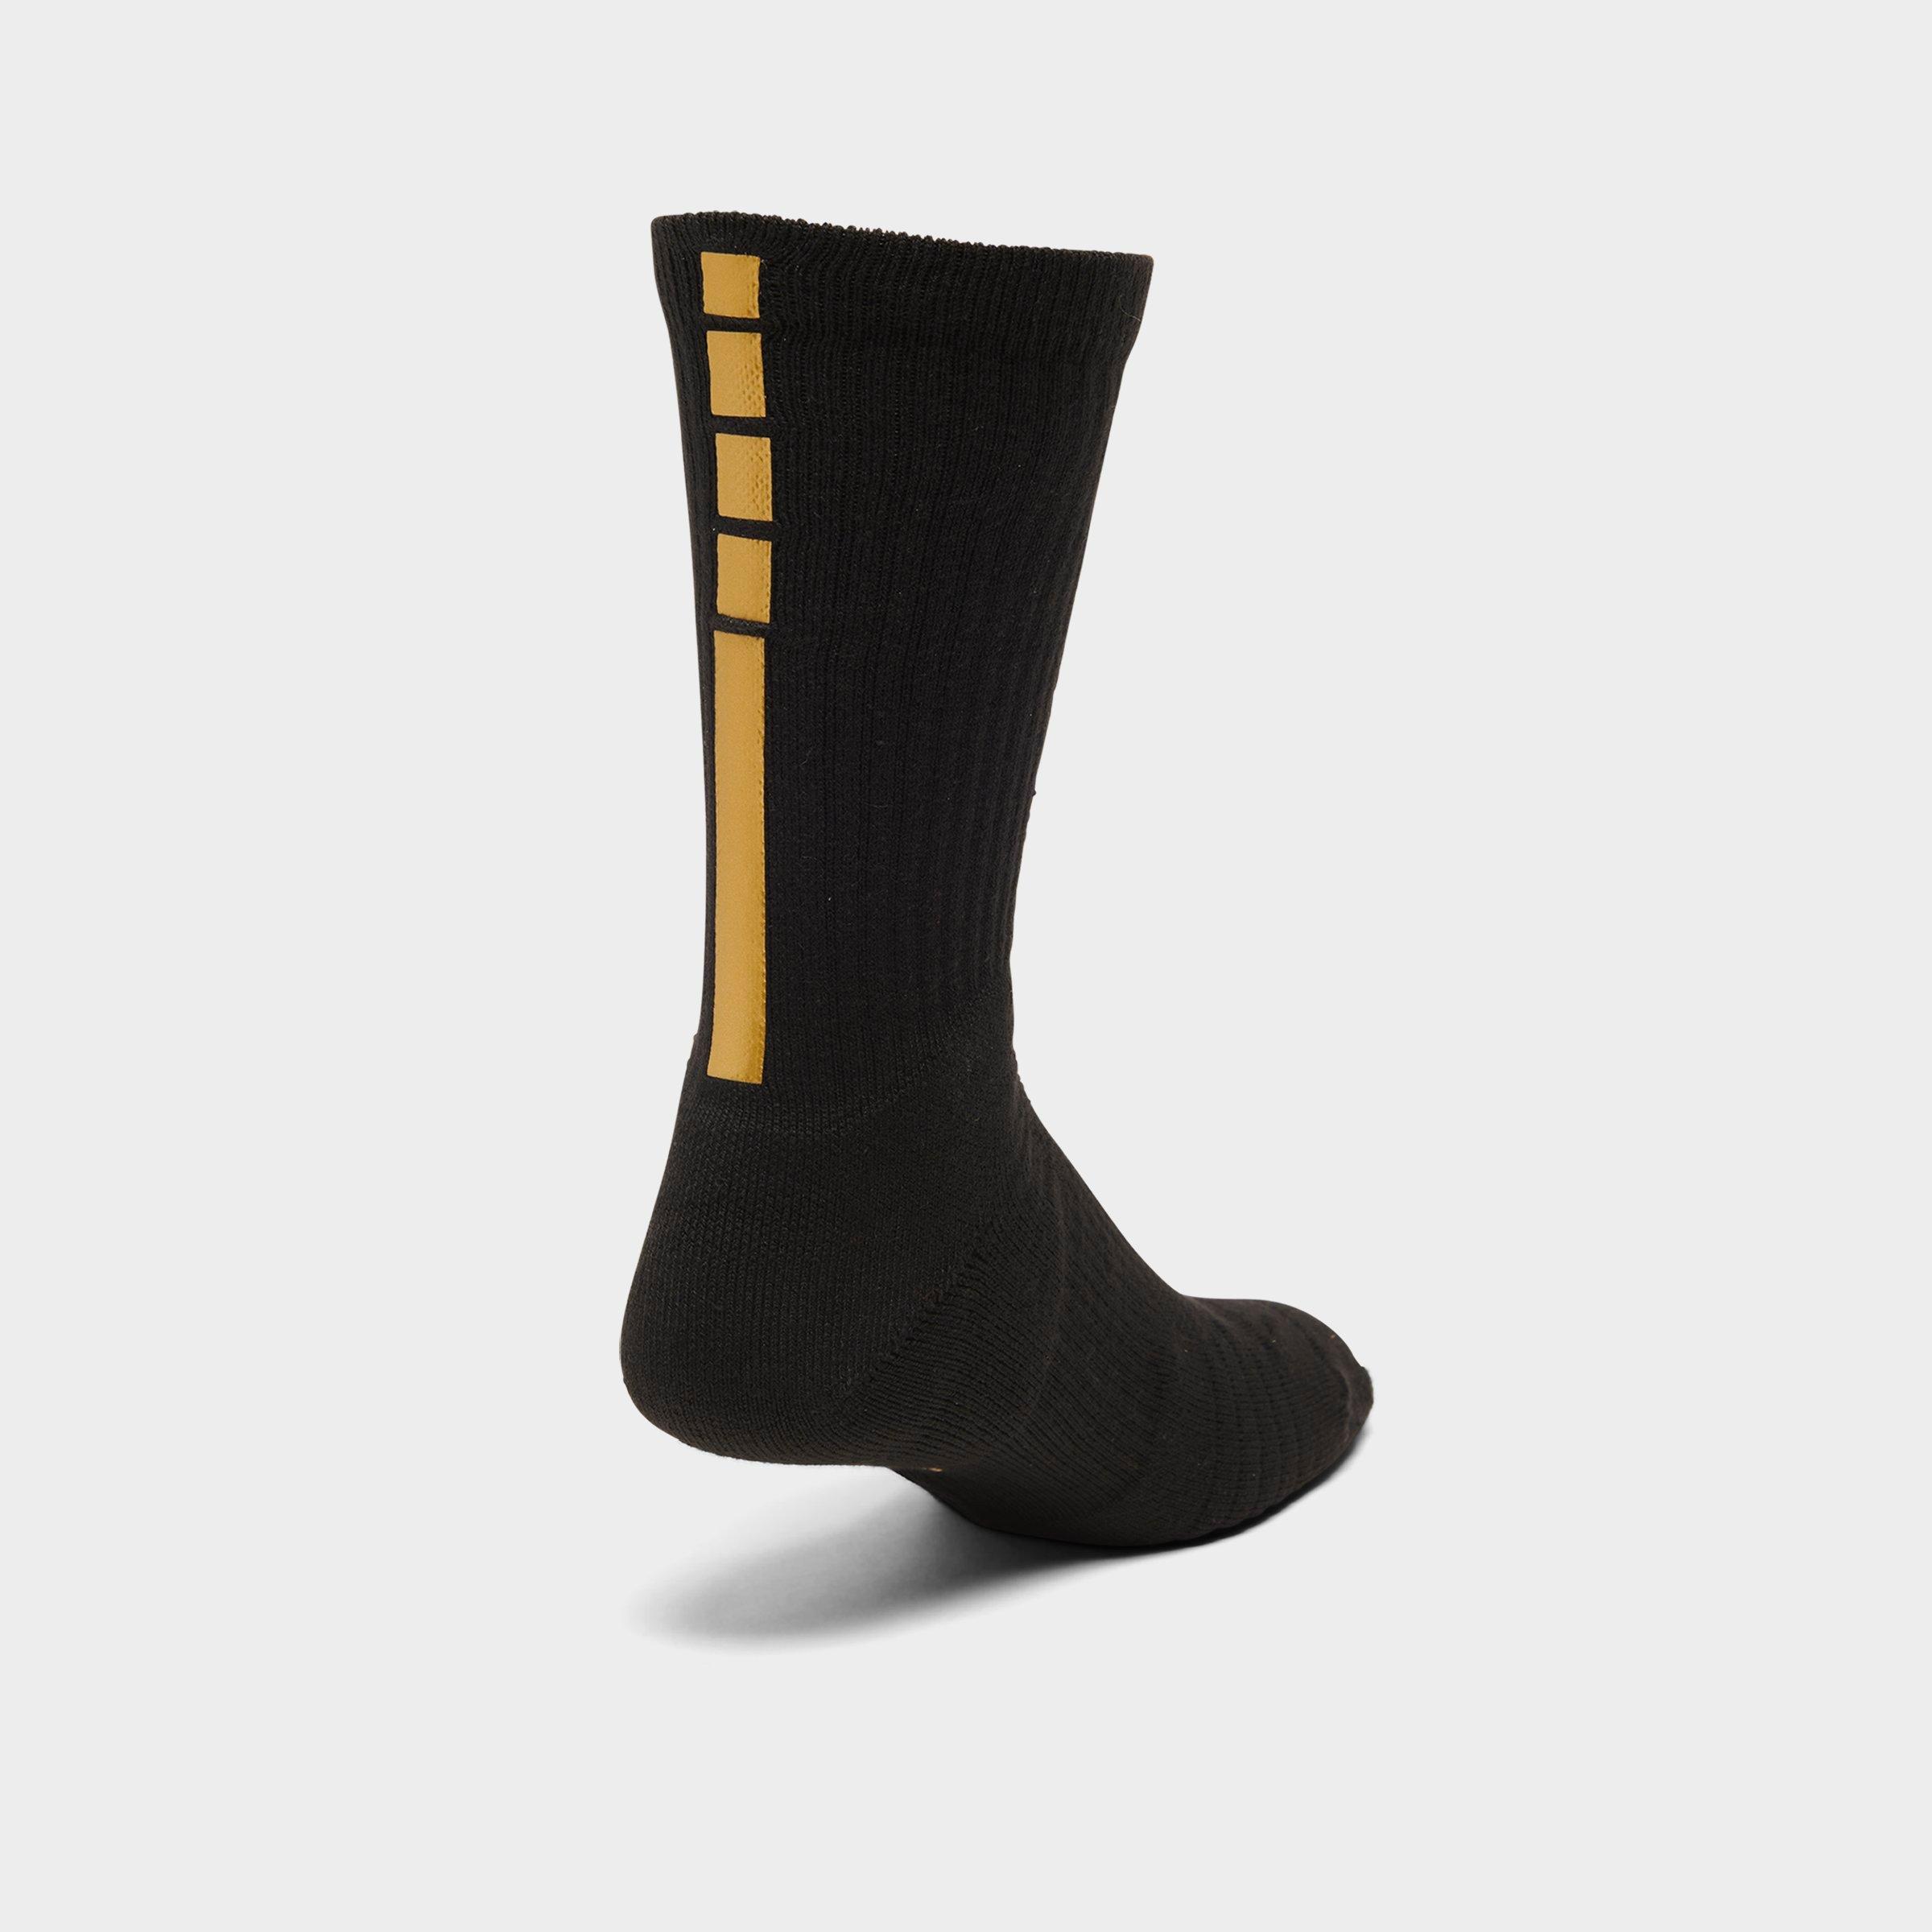 nike elite socks black and gold